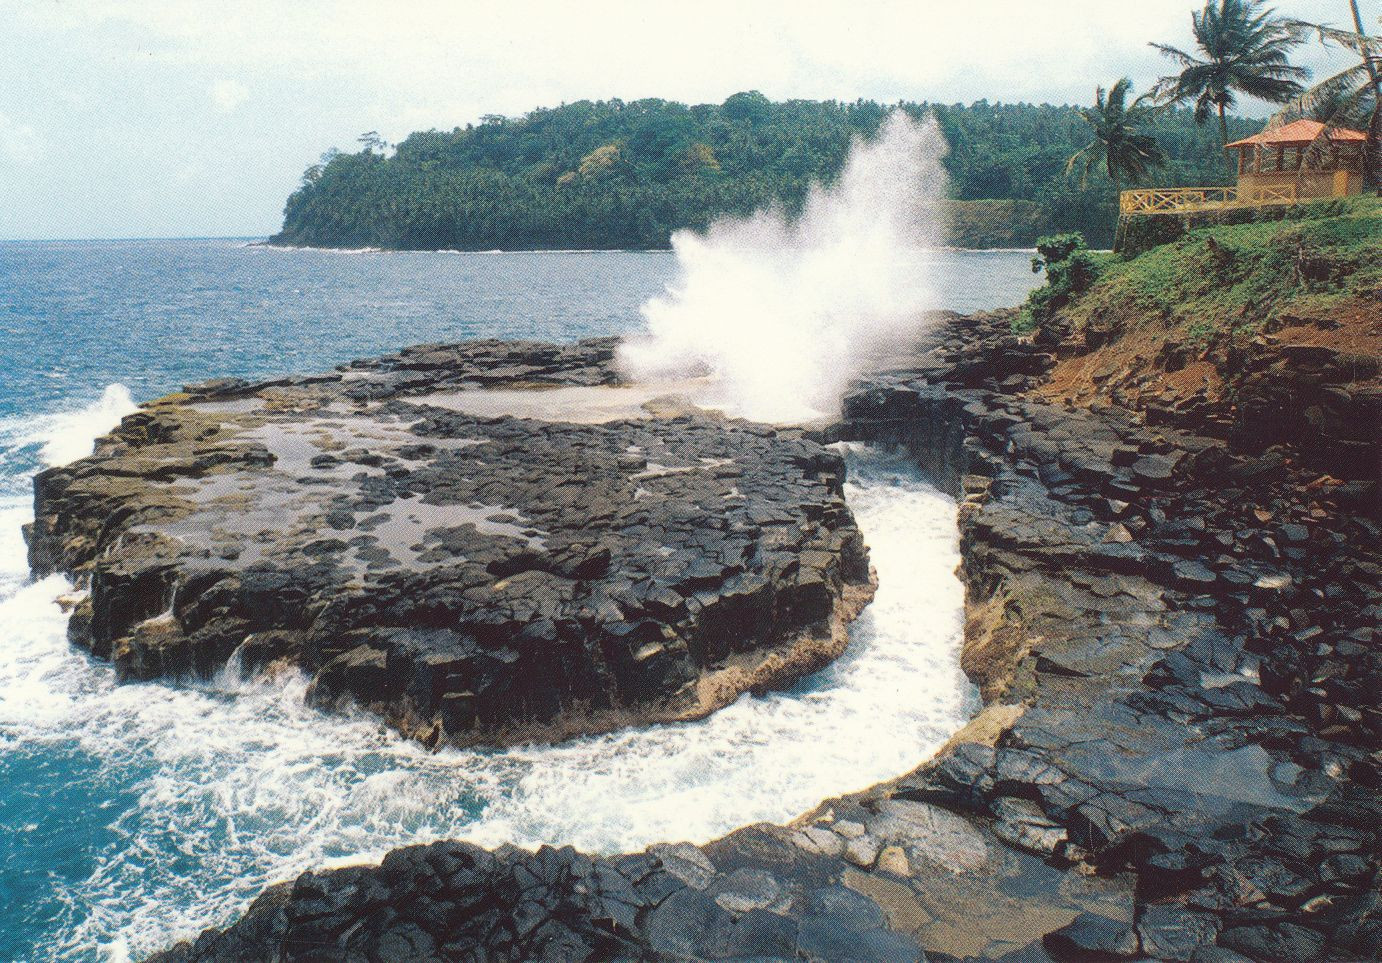 S9EFW Sao Tome Island, Sao Tome and Principe